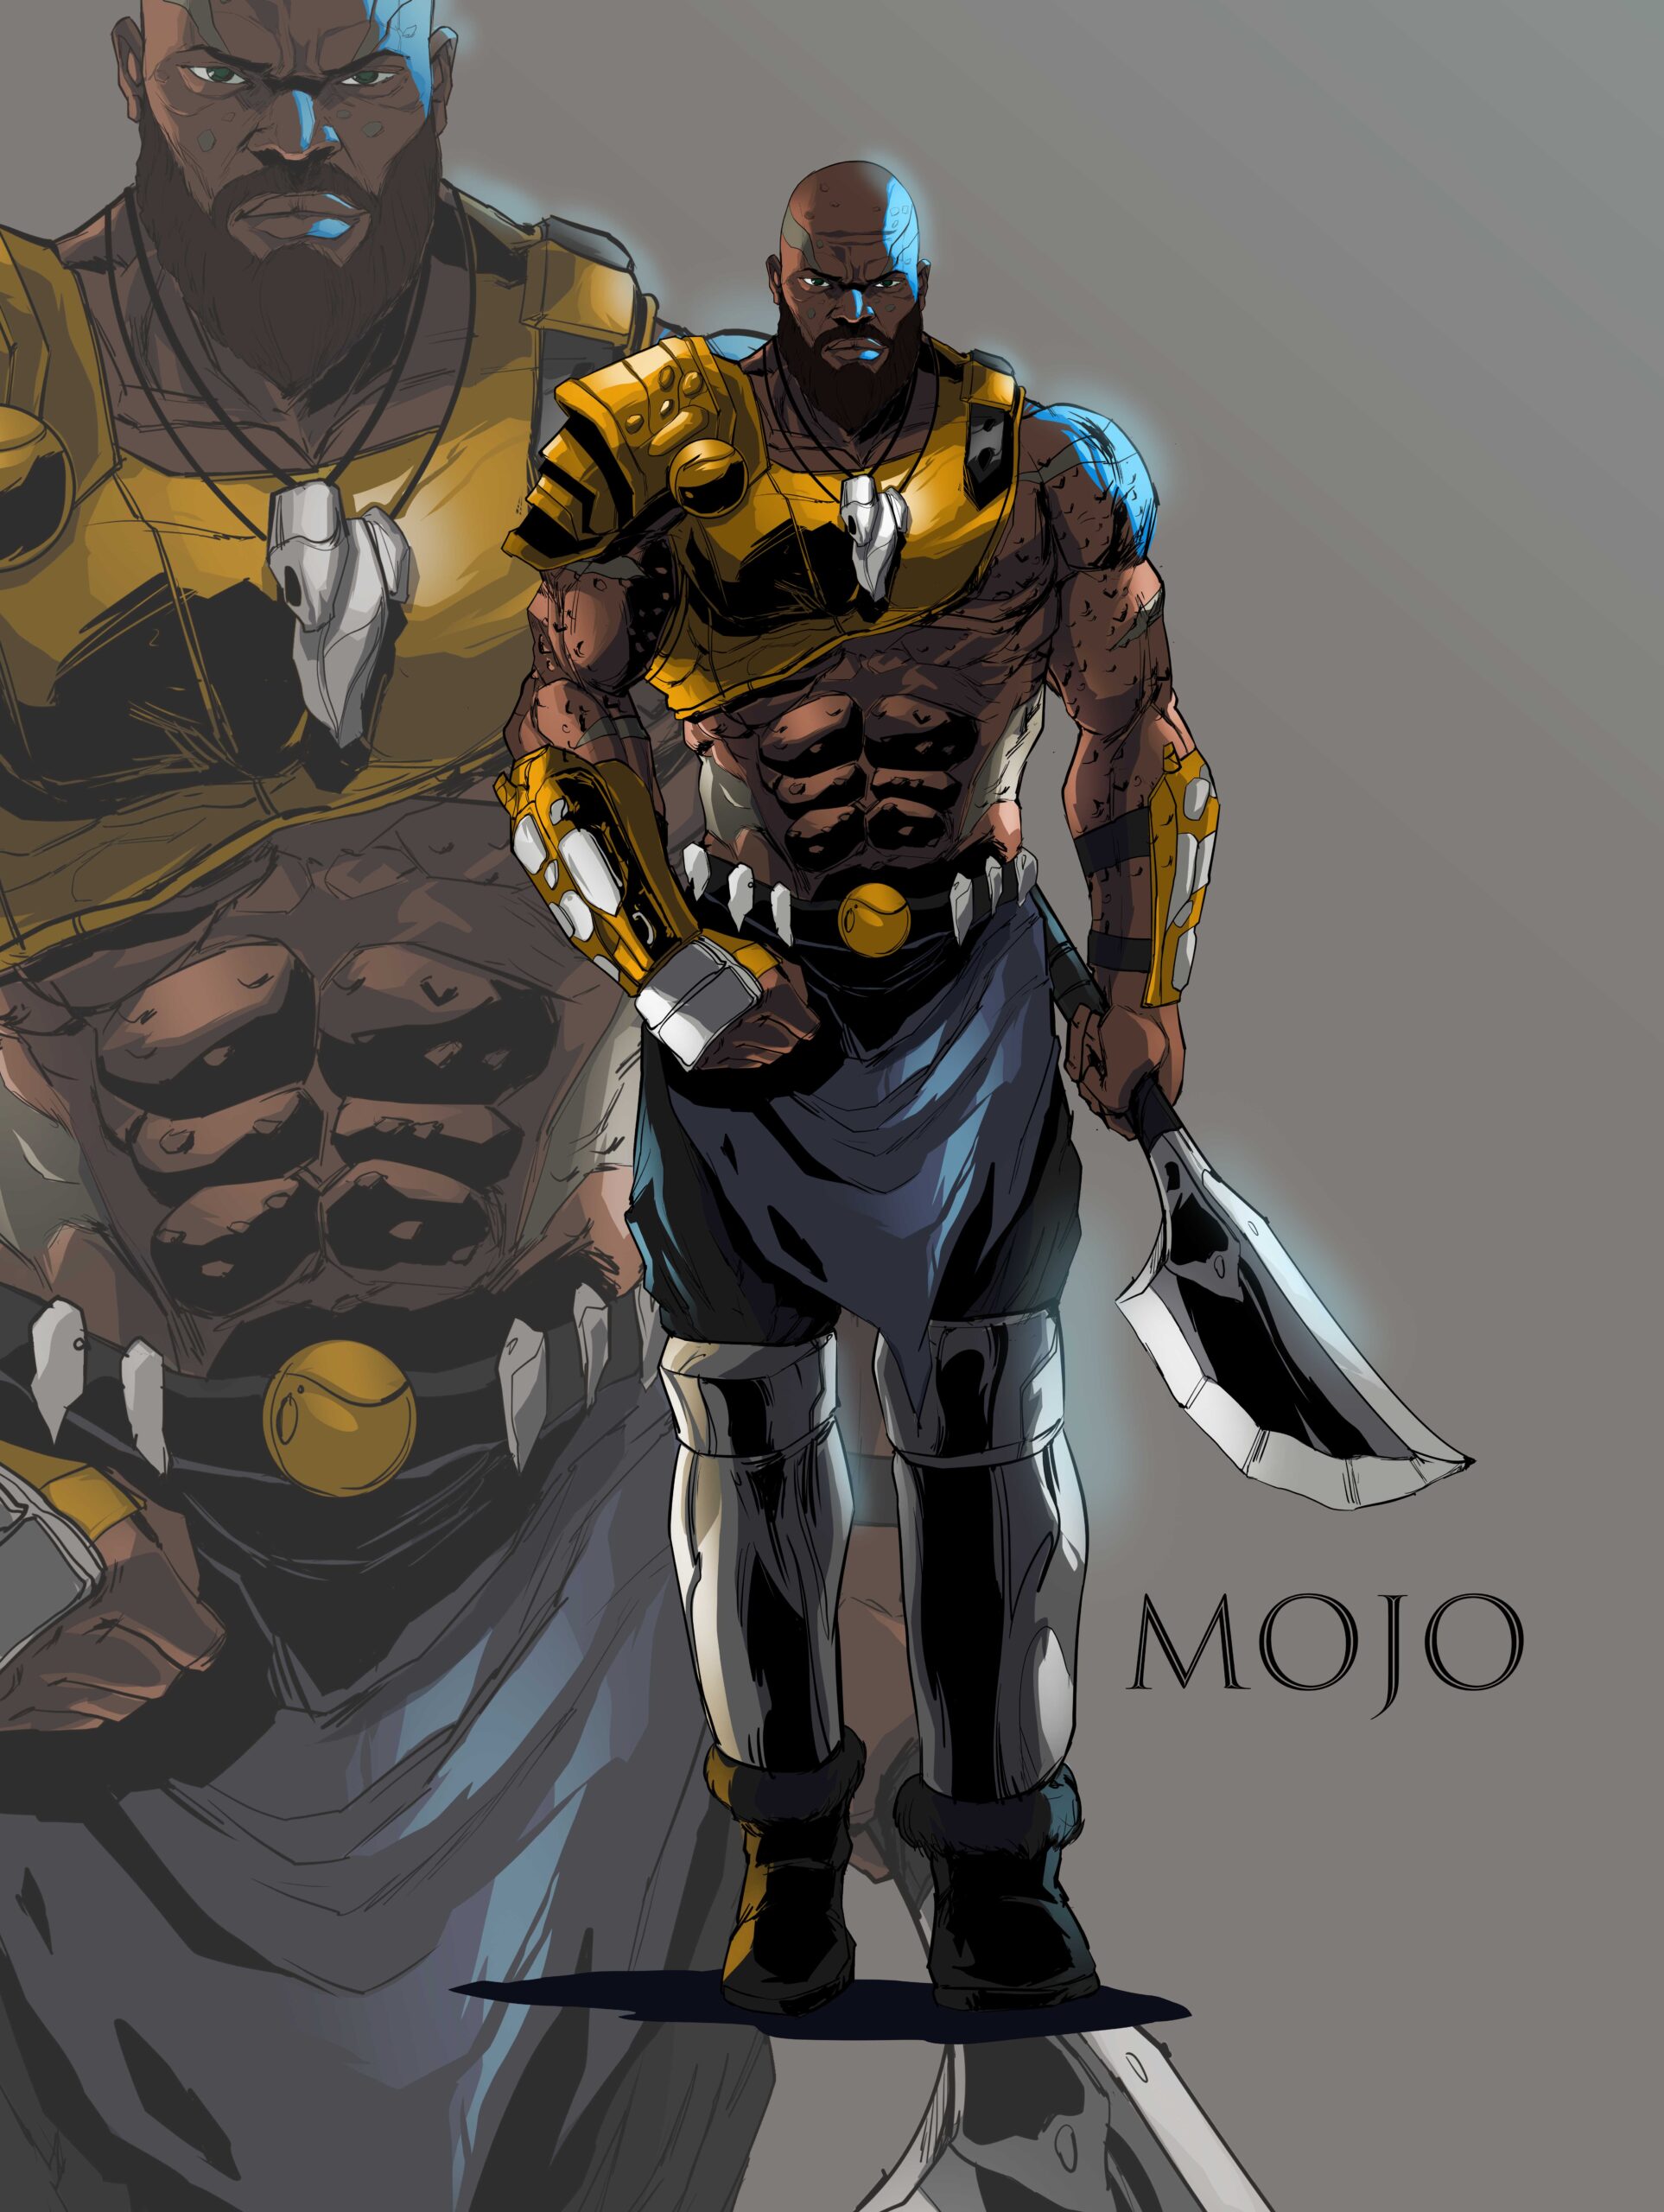 Character Art - Mojo - 2020